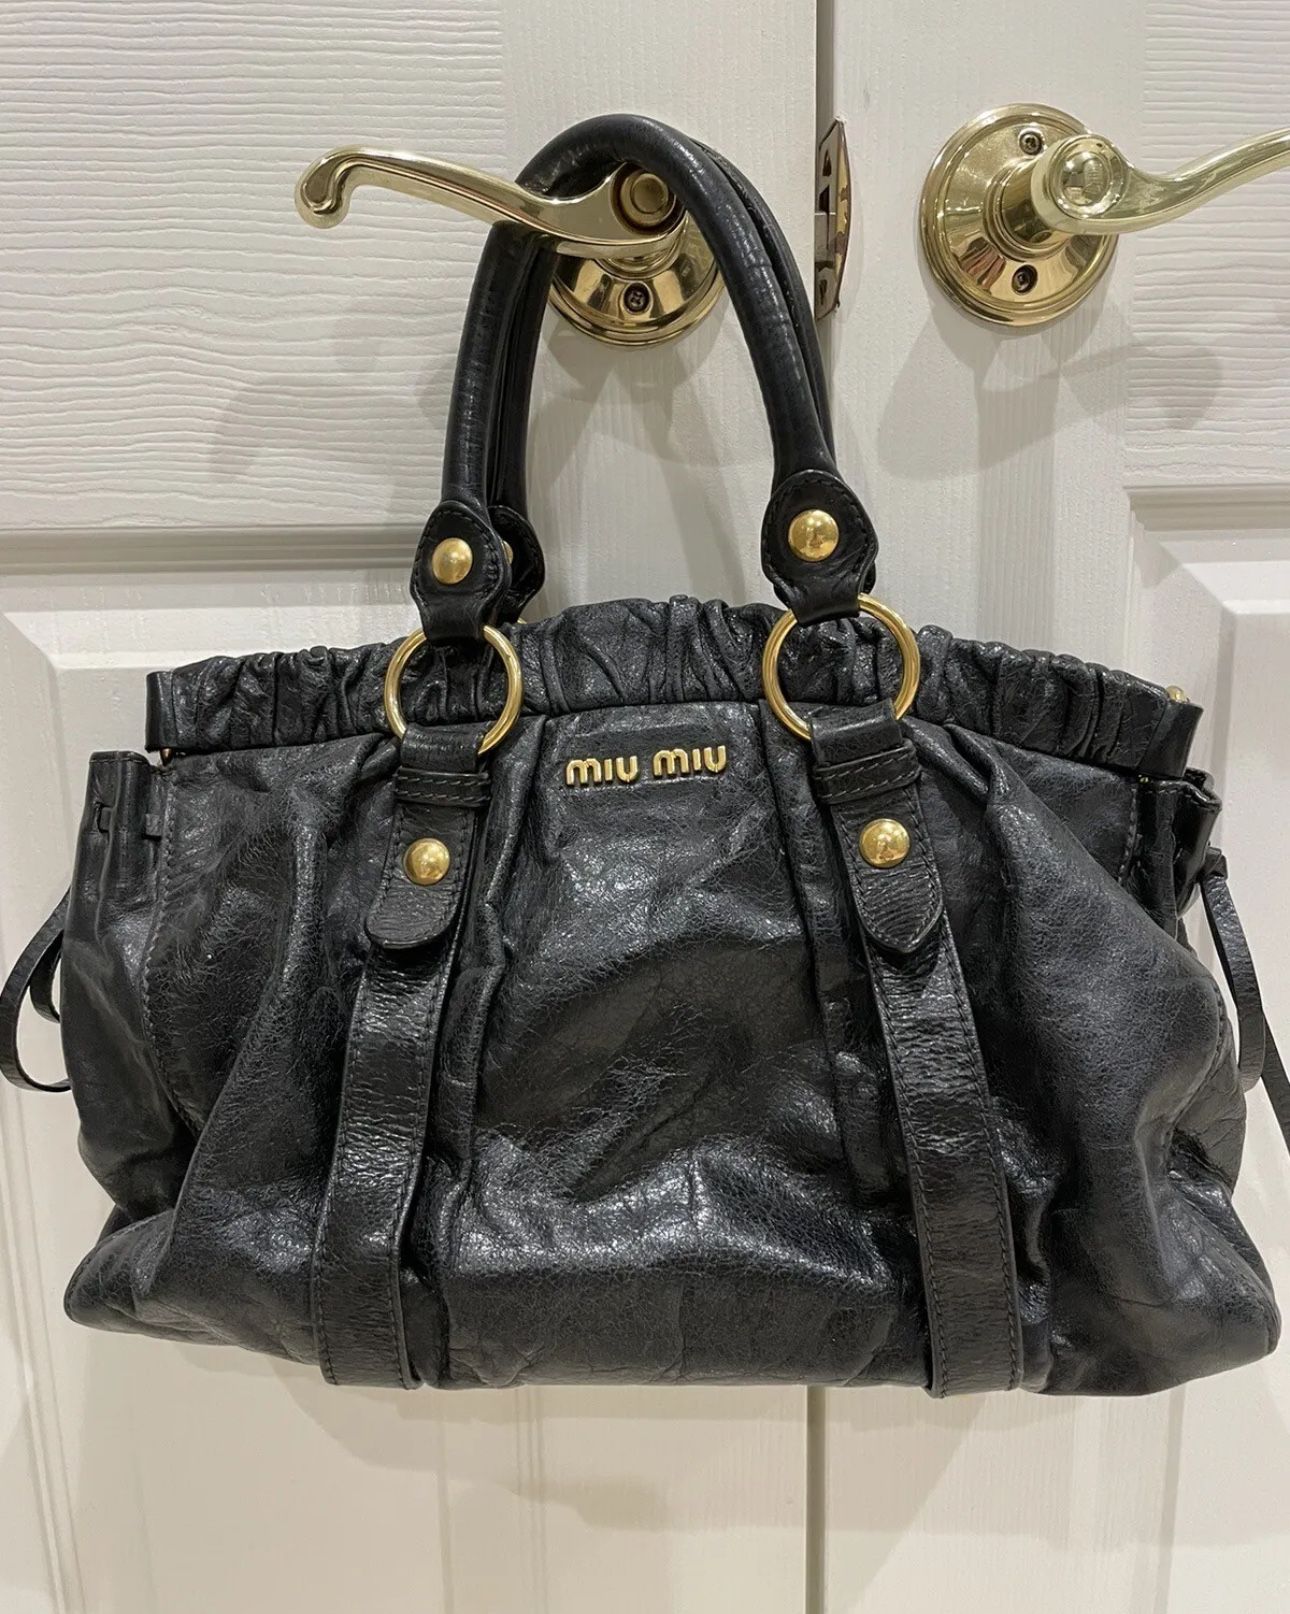 MIU MIU 2Way Handbag Black Leather Used- Authentic